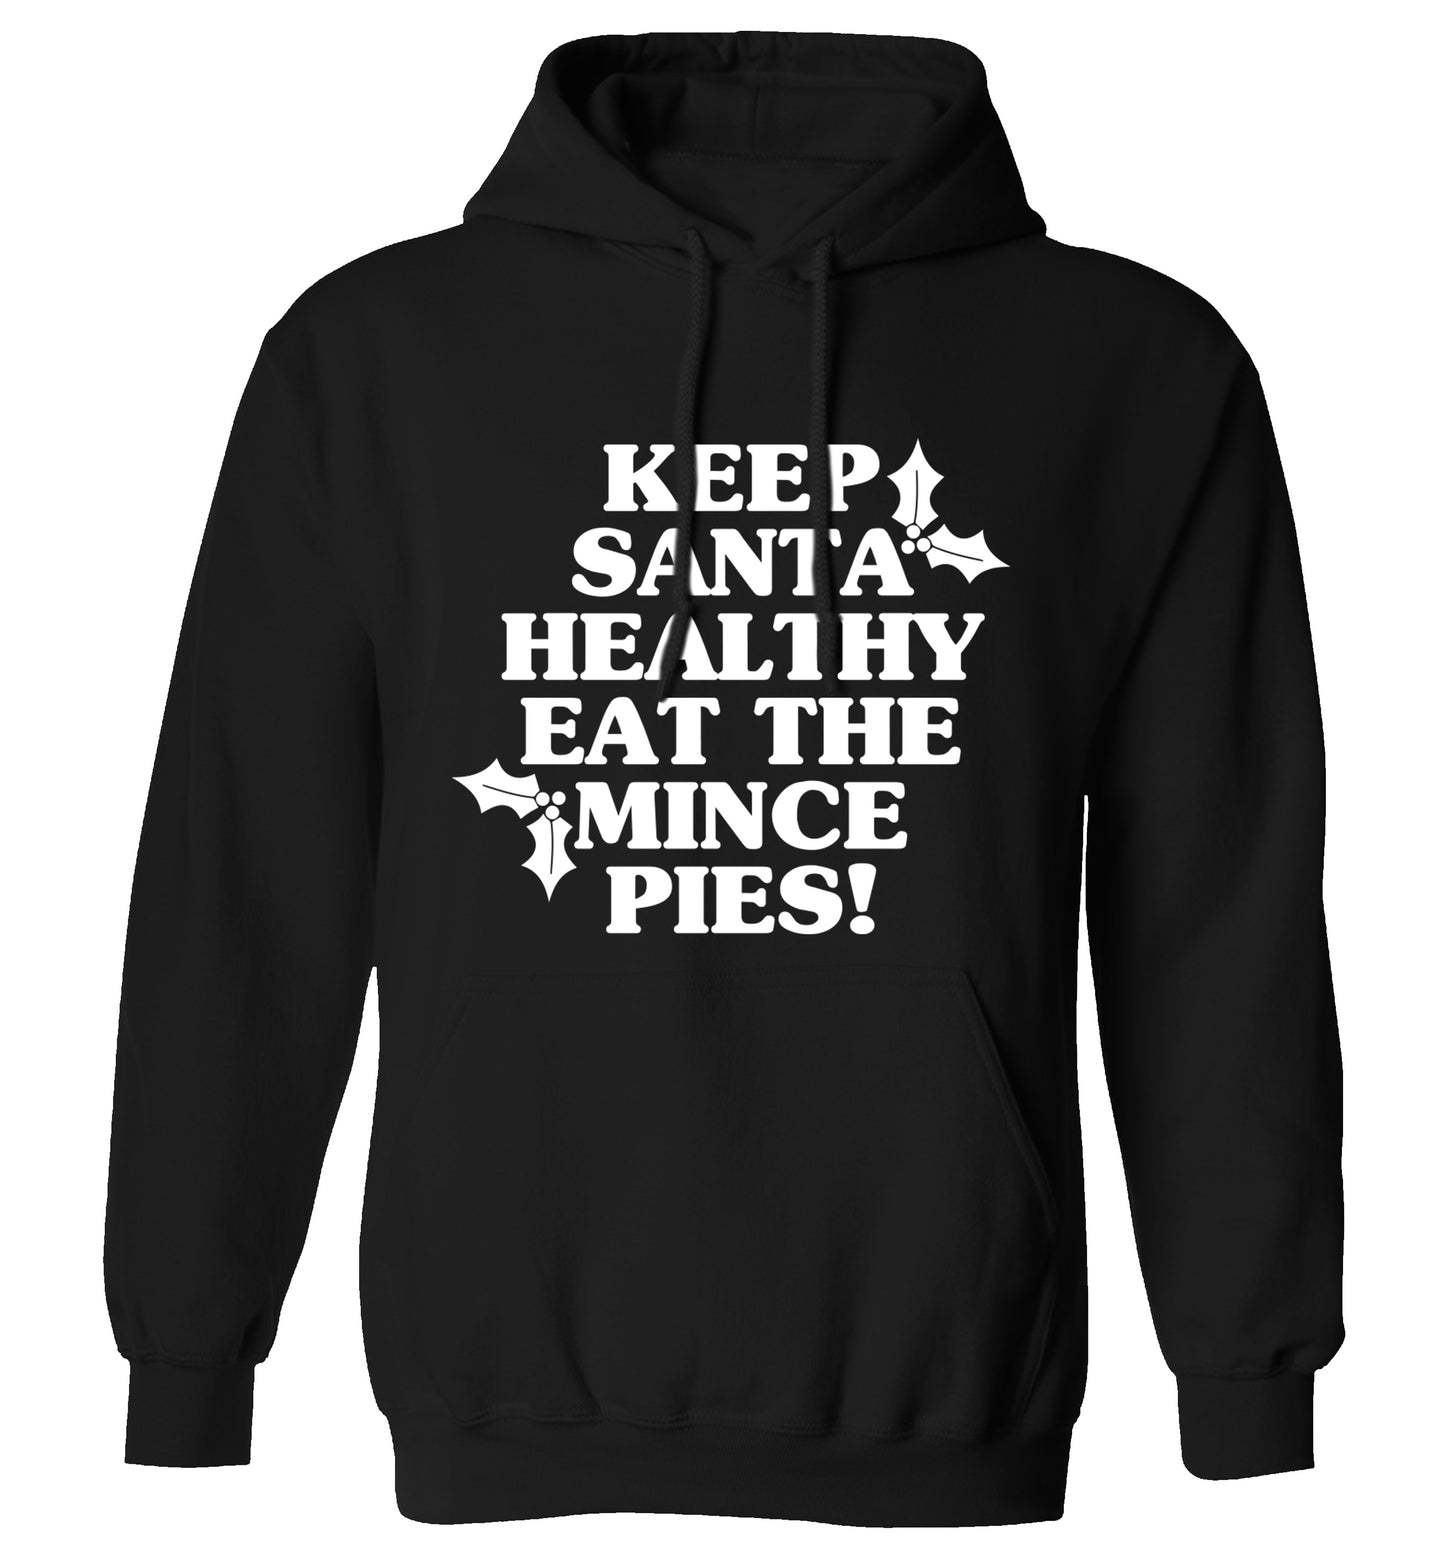 Keep santa healthy eat the mince pies adults unisex black hoodie 2XL